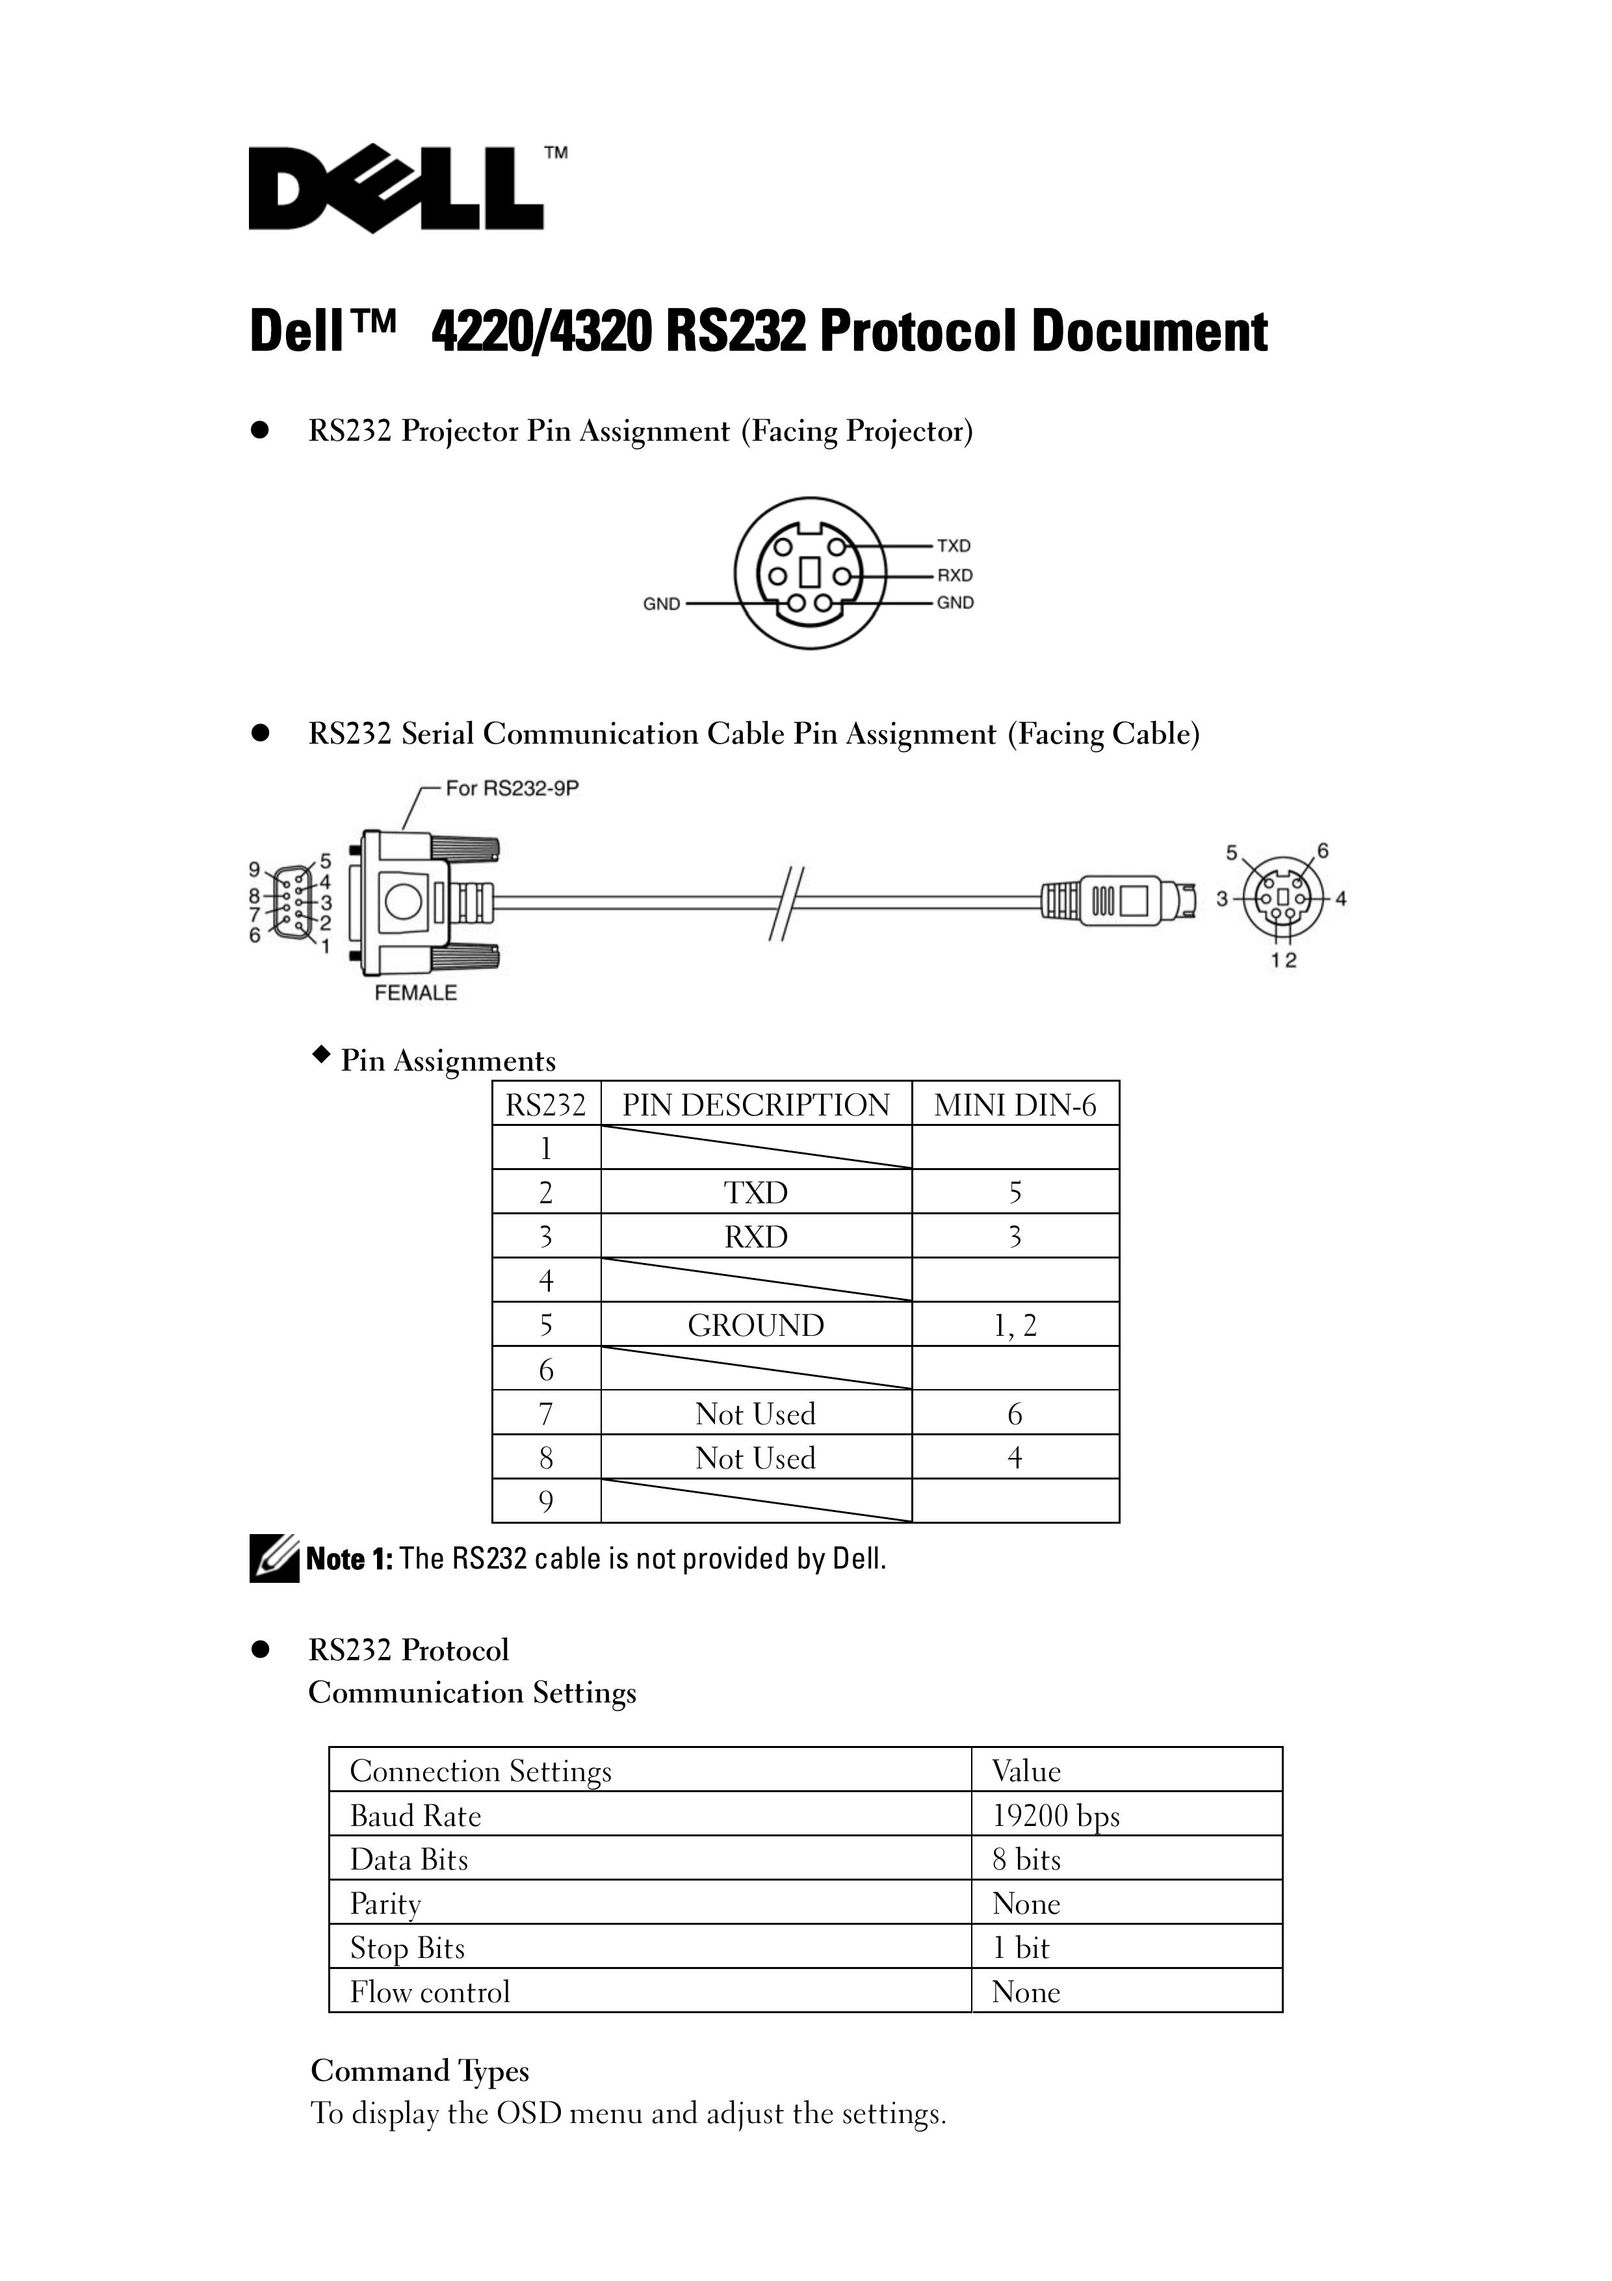 Dell 4220 Projector User Manual